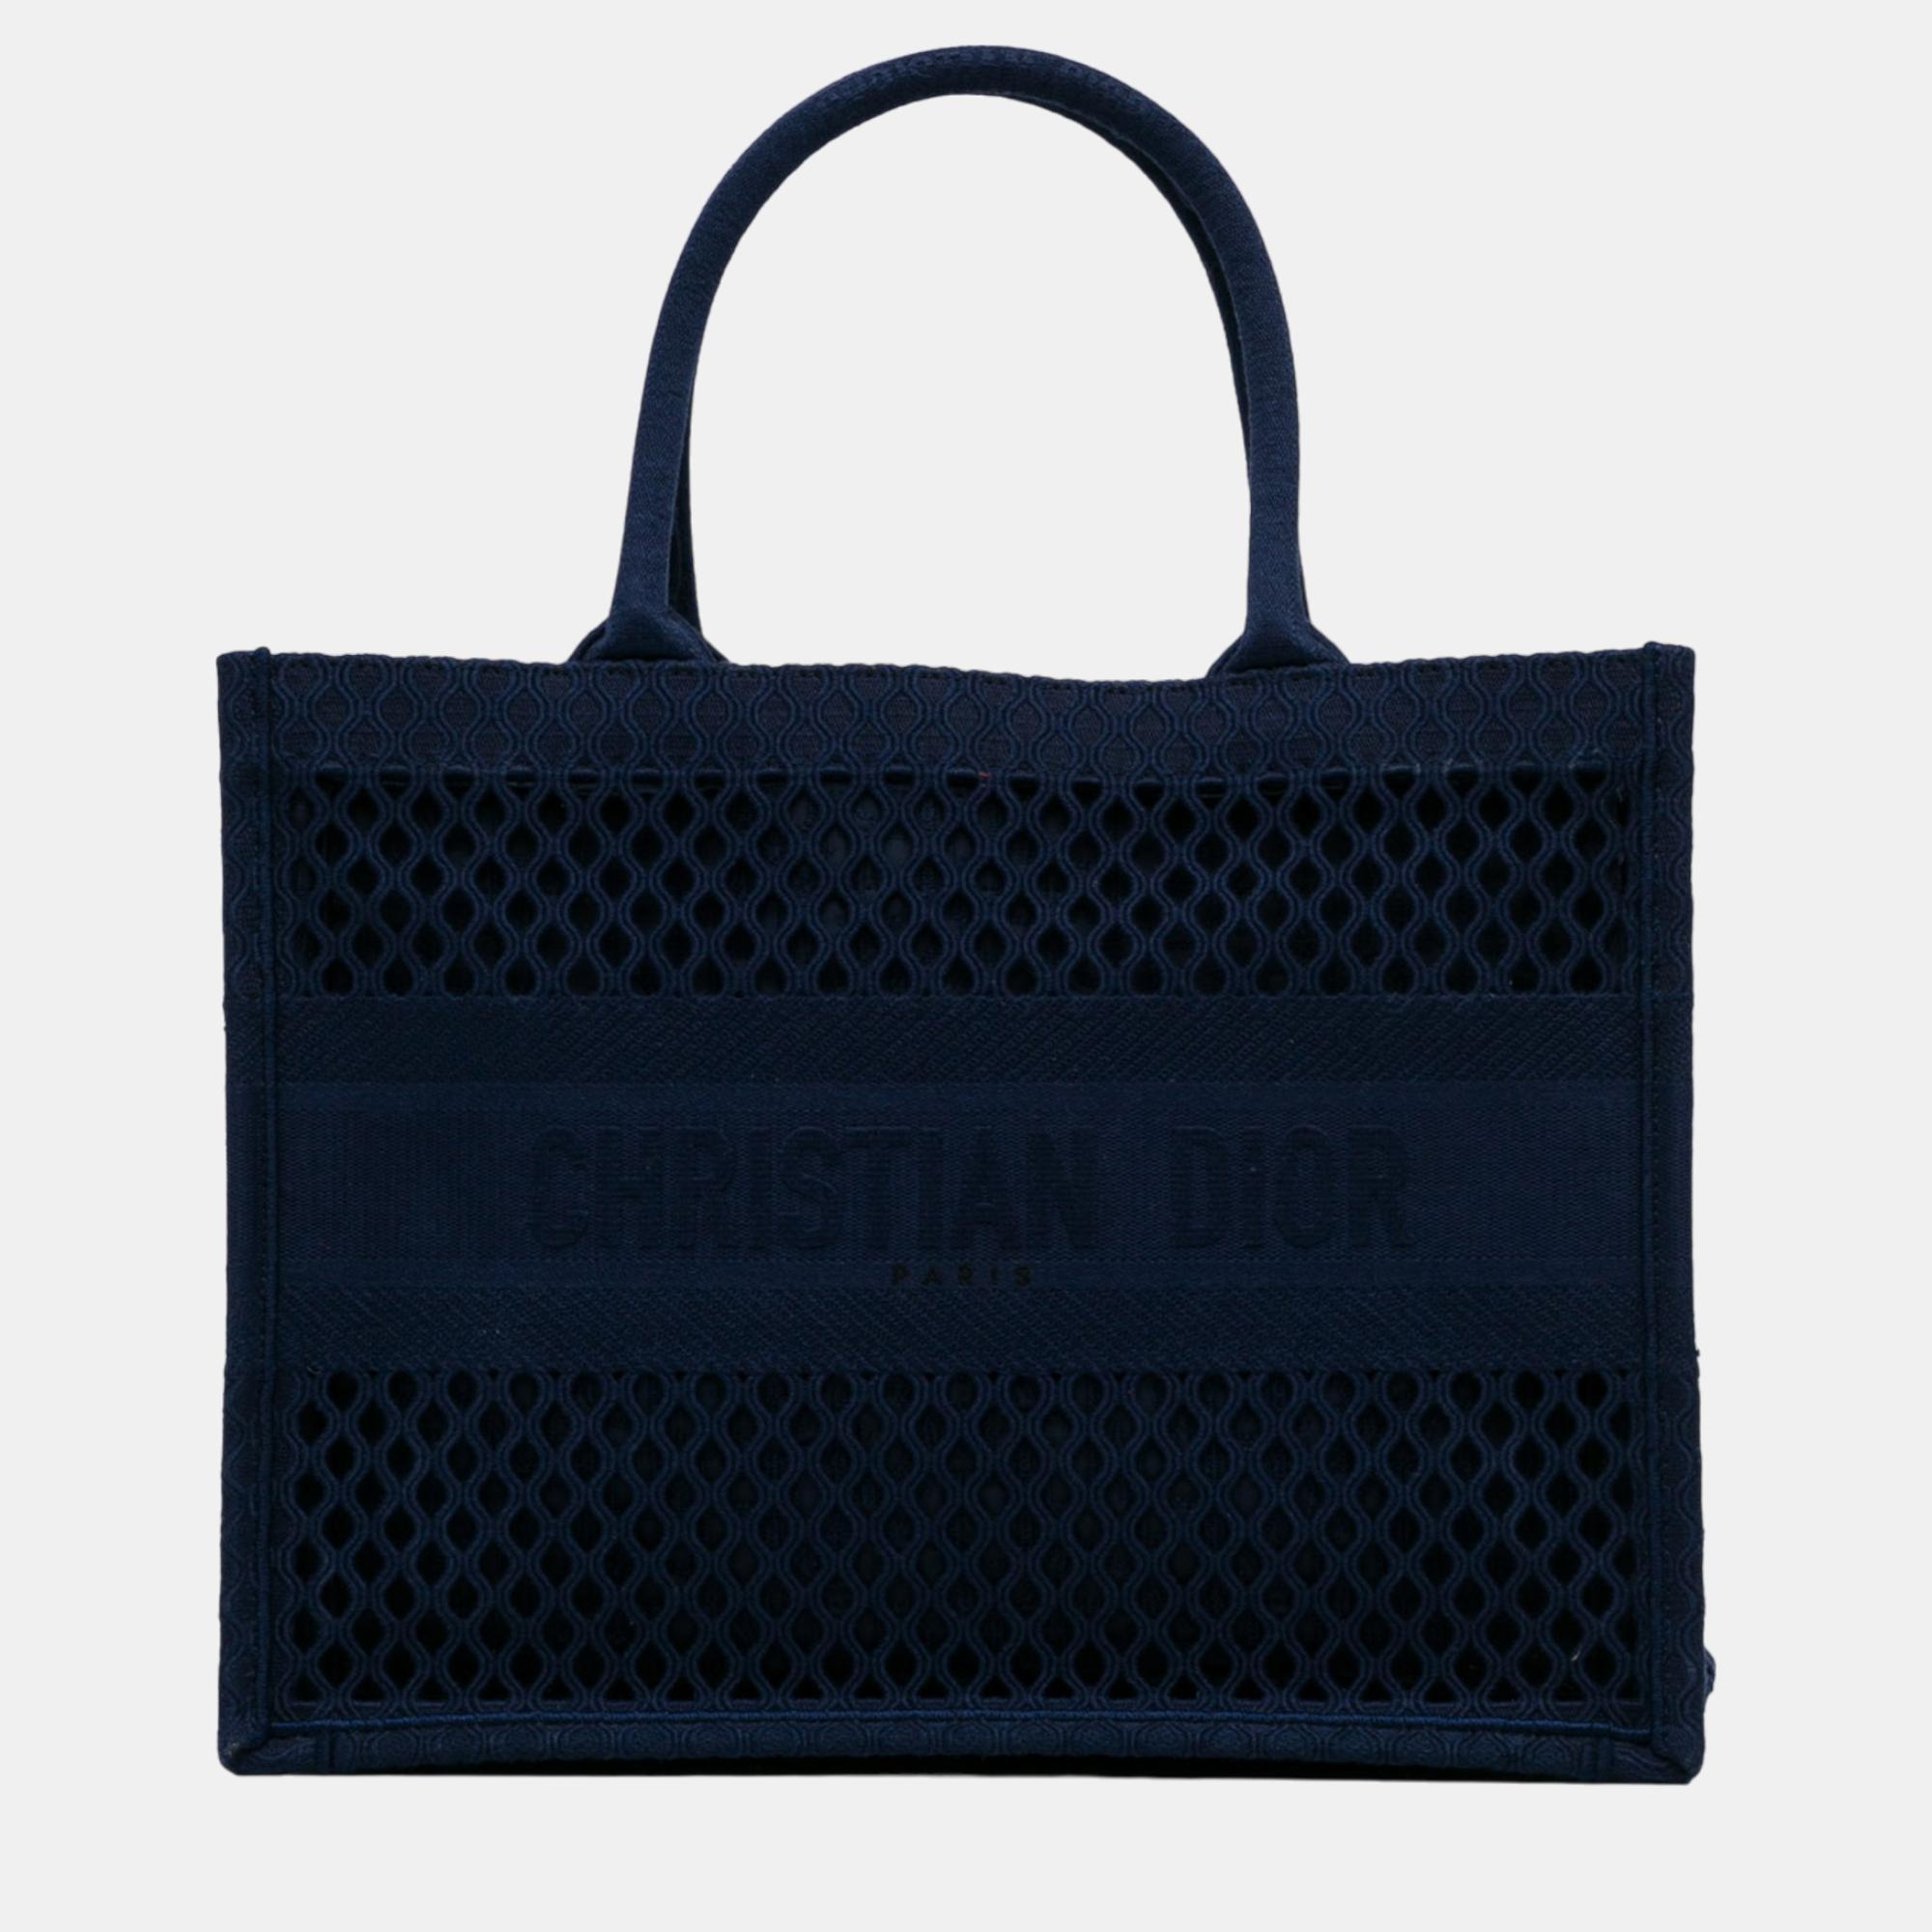 Dior navy blue medium mesh book tote